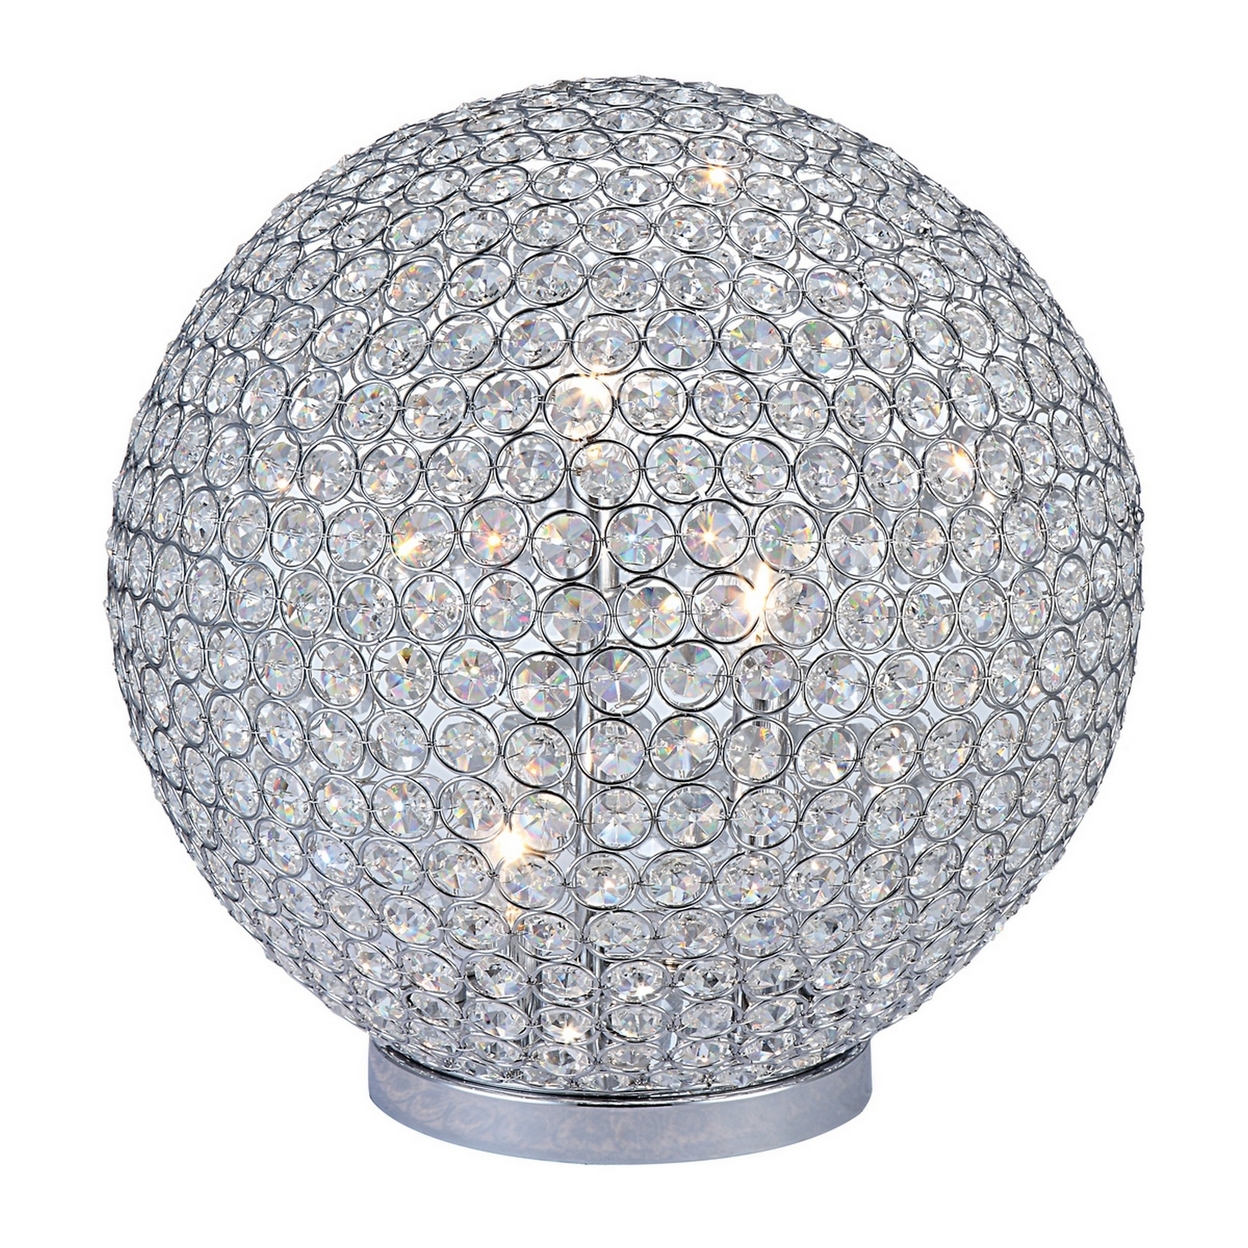 Hazel 17 Inch Table Lamp, Crystal, LED Globe Shade, Metal, Clear Finish -Saltoro Sherpi